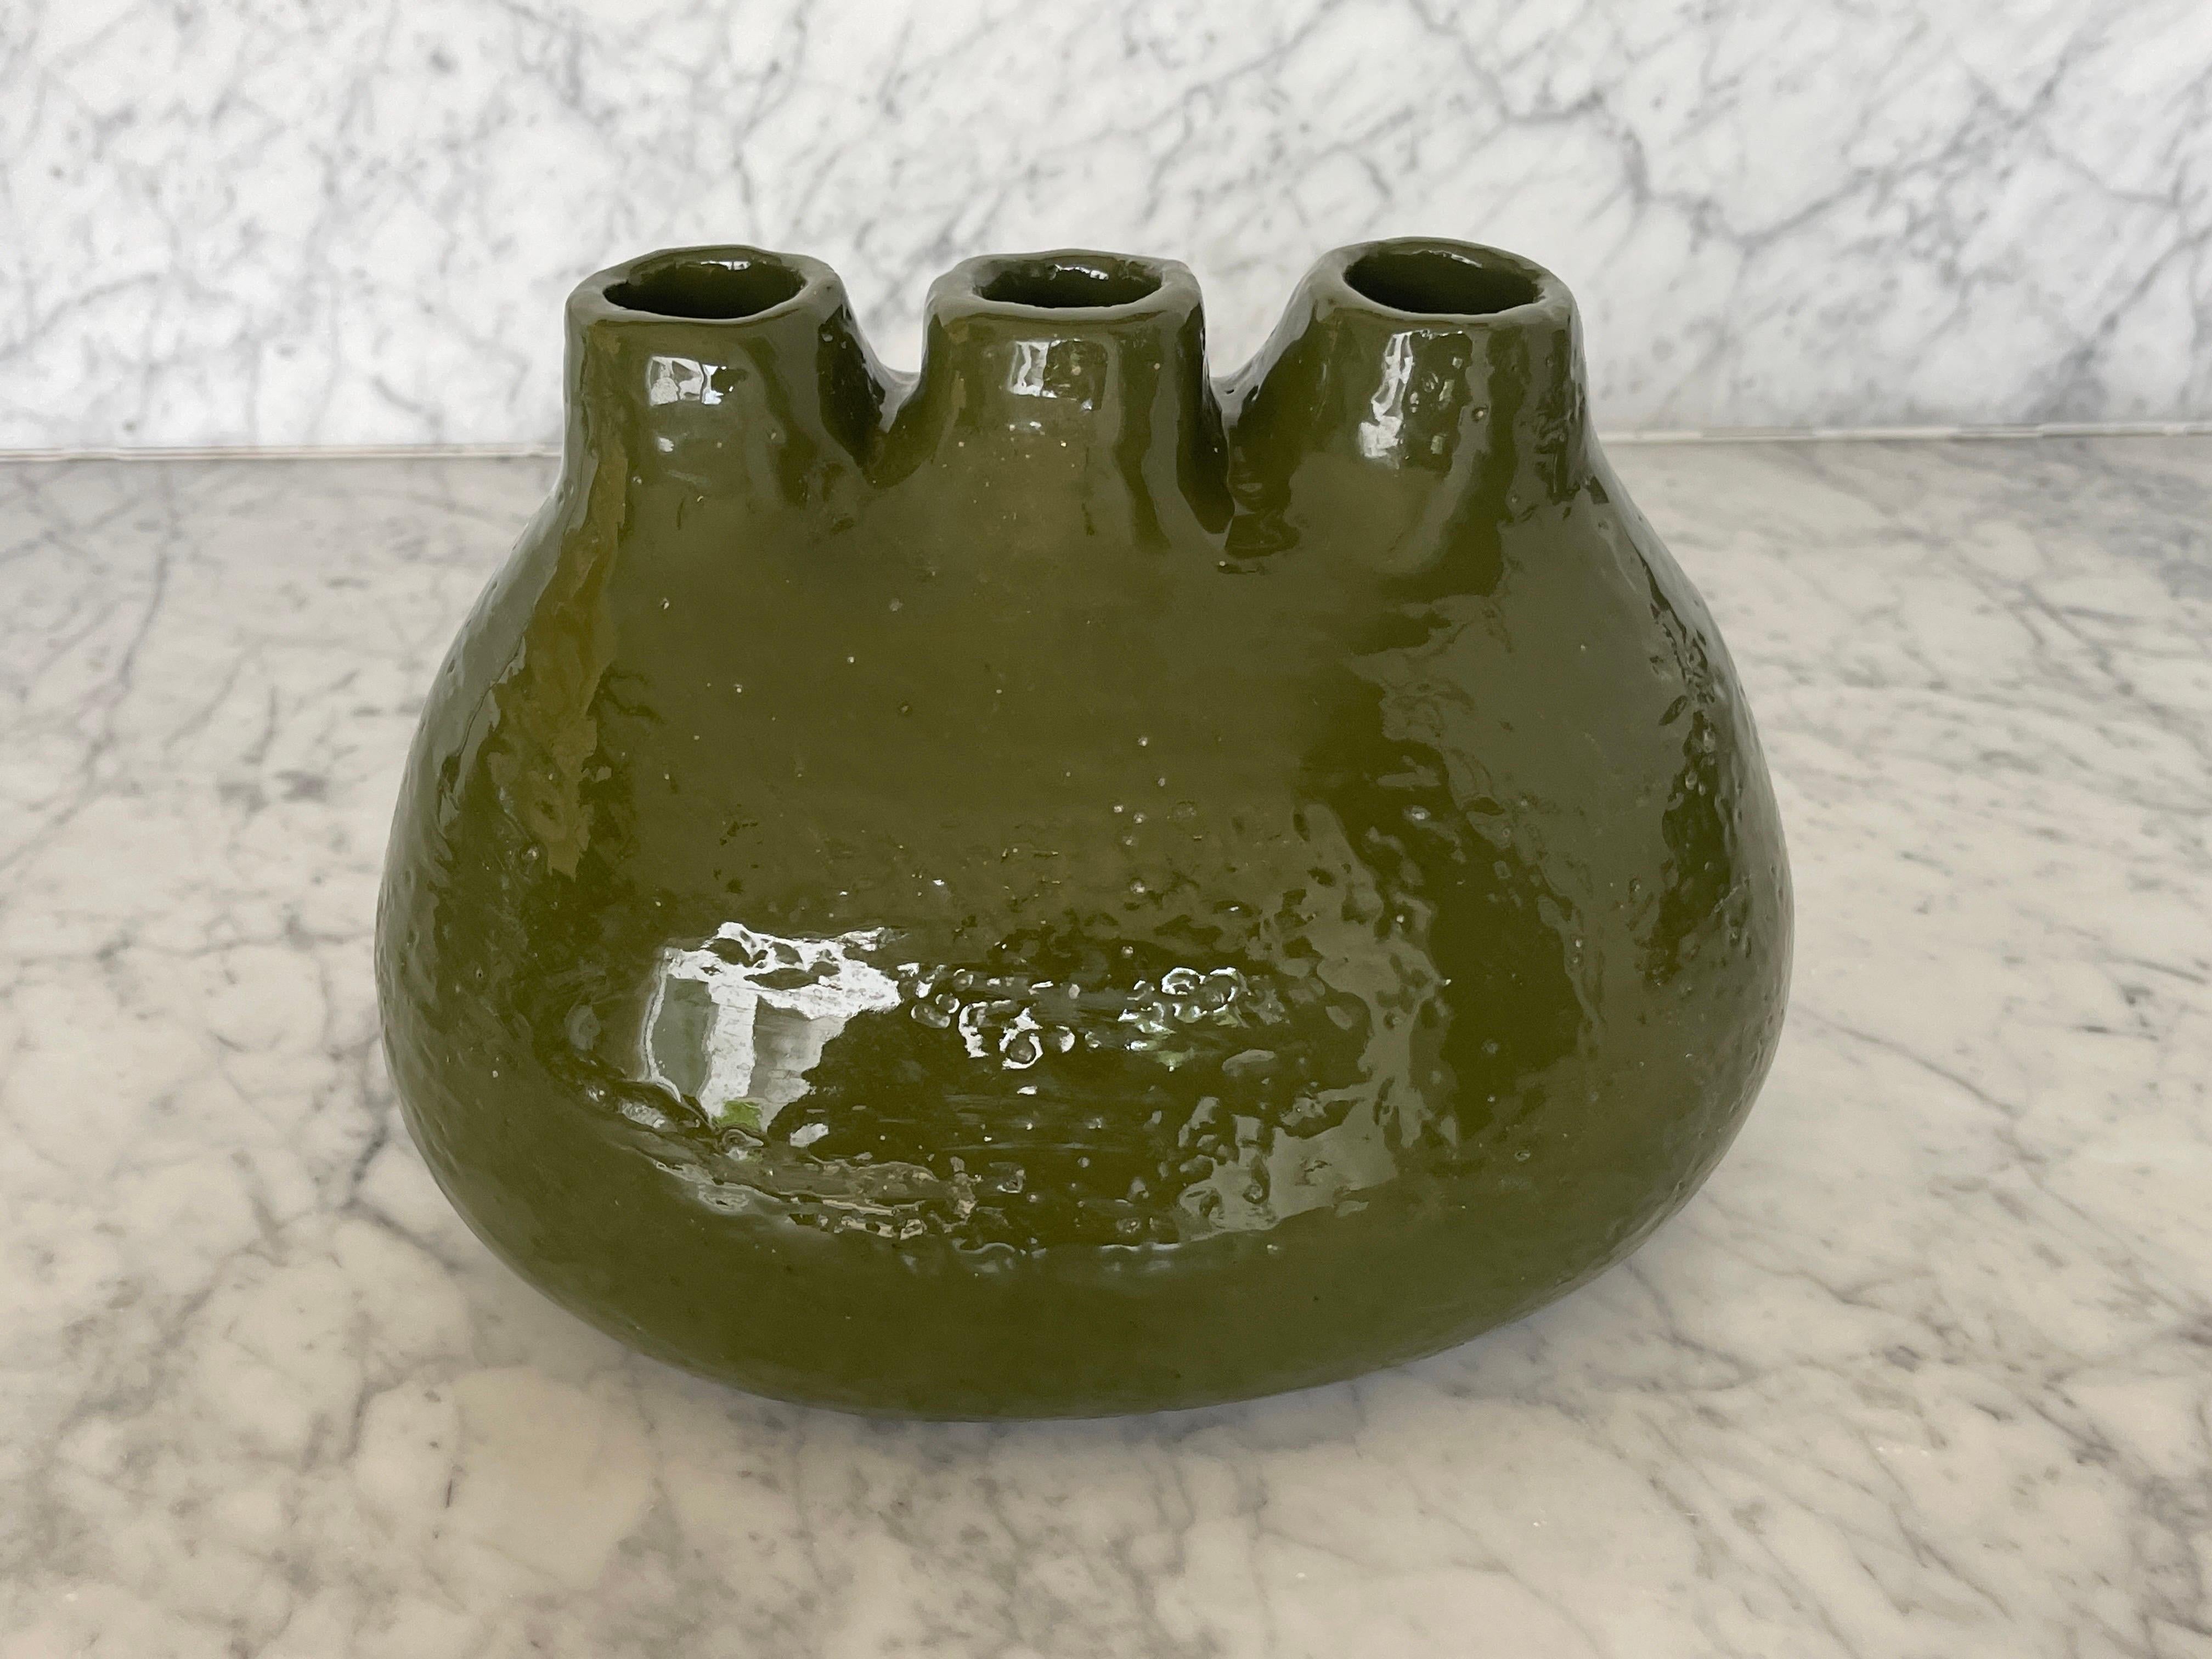 Handmade ceramic vessel in avocado green by Chilean Belgian artisy Mariela Ceramica